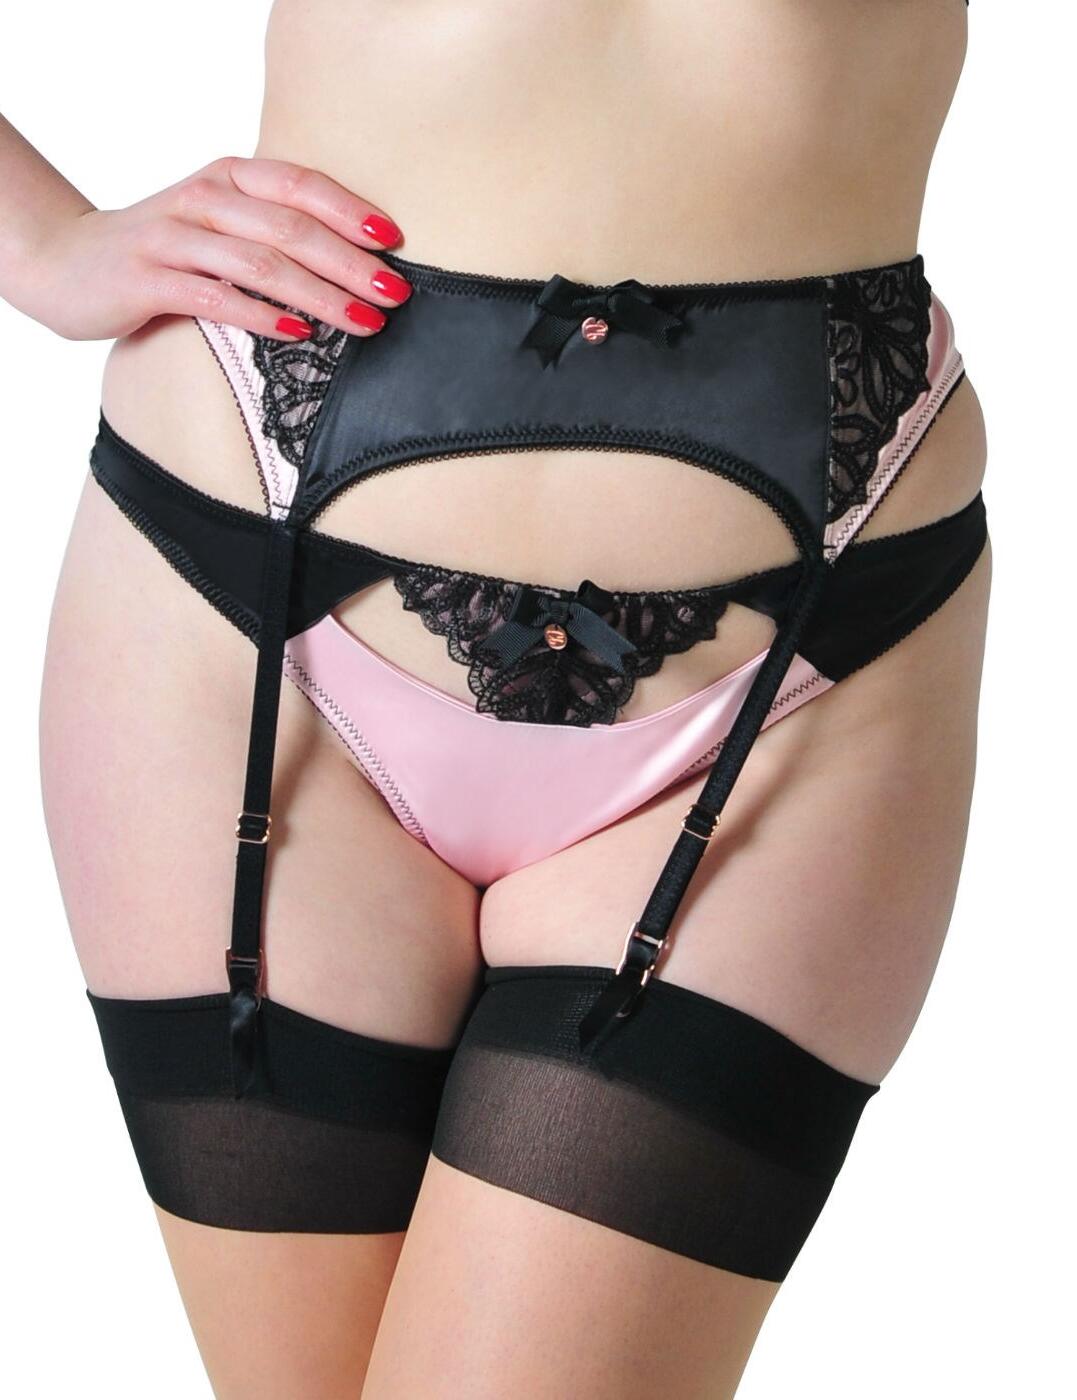 ST2504 Scantilly by Curvy Kate Invitation Suspender Belt	 - ST2504 Black/Crystal